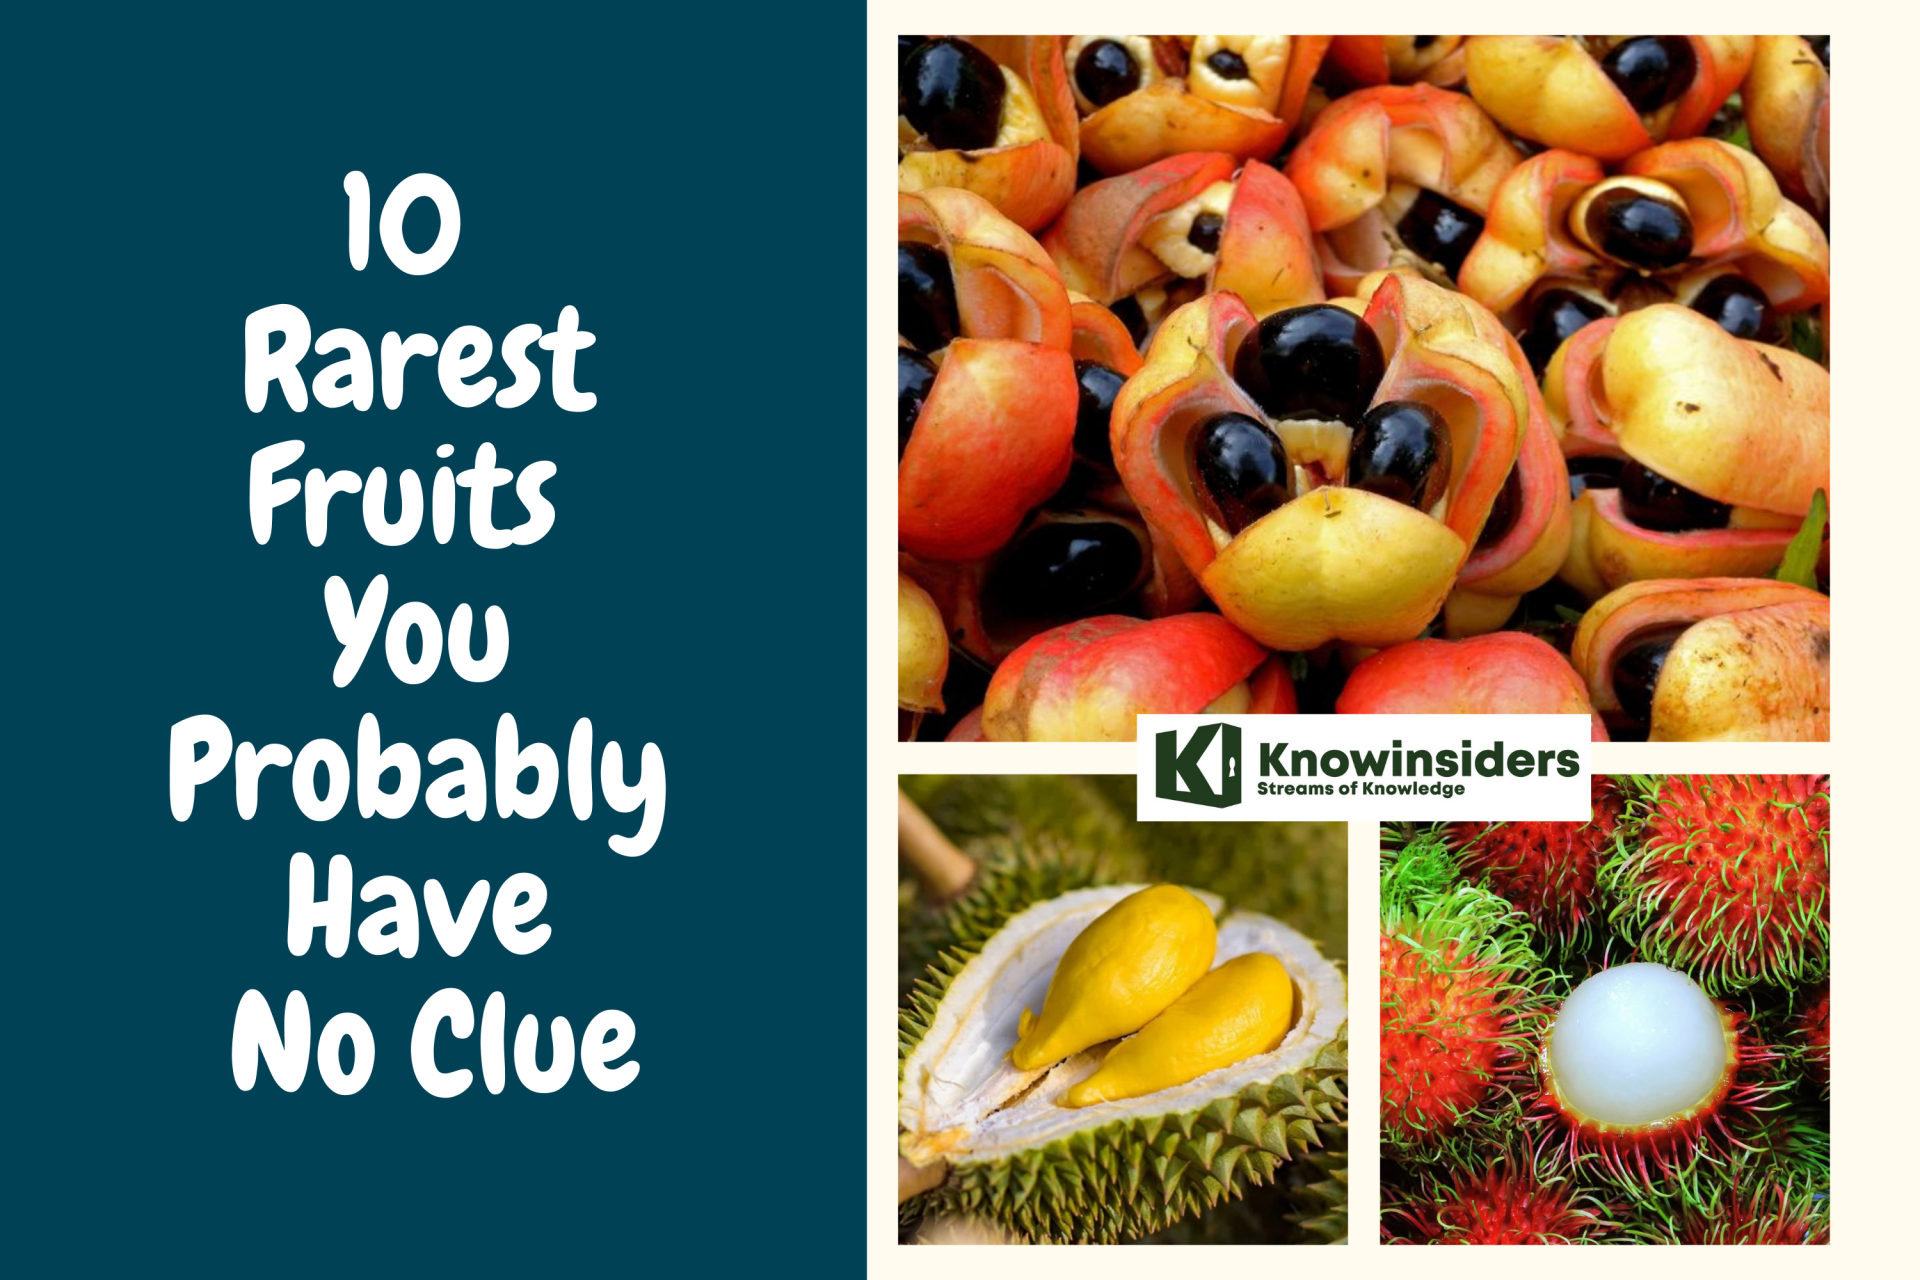 10 Rarest Fruits You Probably Have No Clue